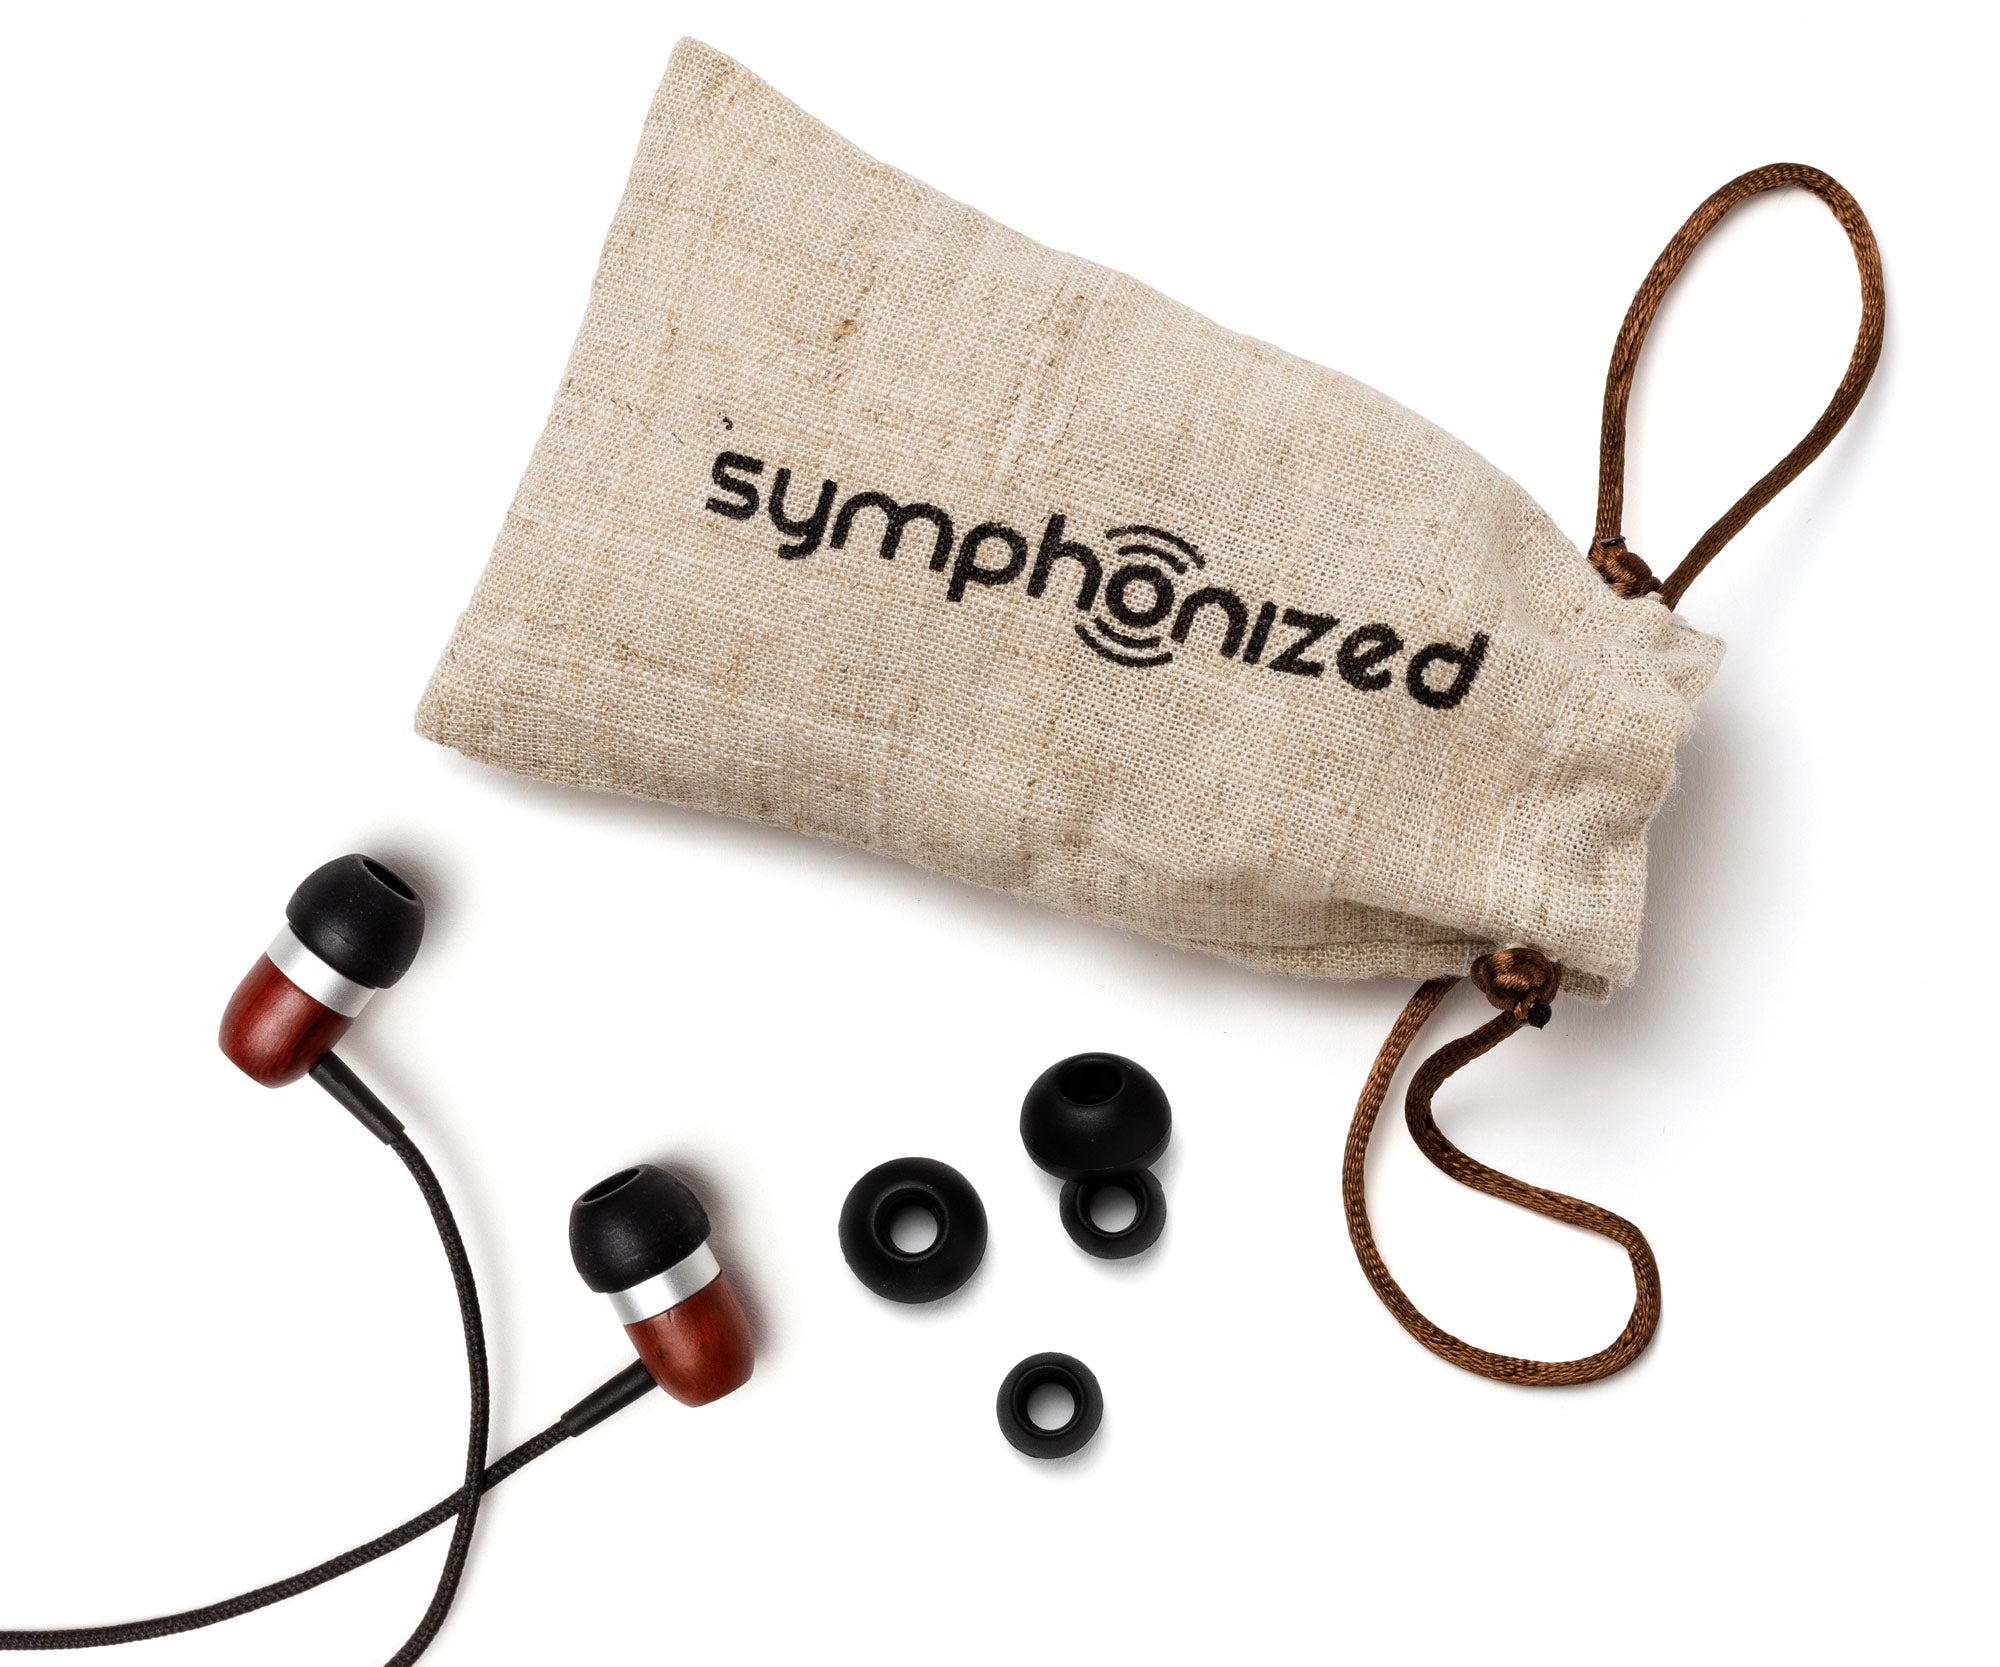 GLXY In-Ear Wood Headphones - Cherry